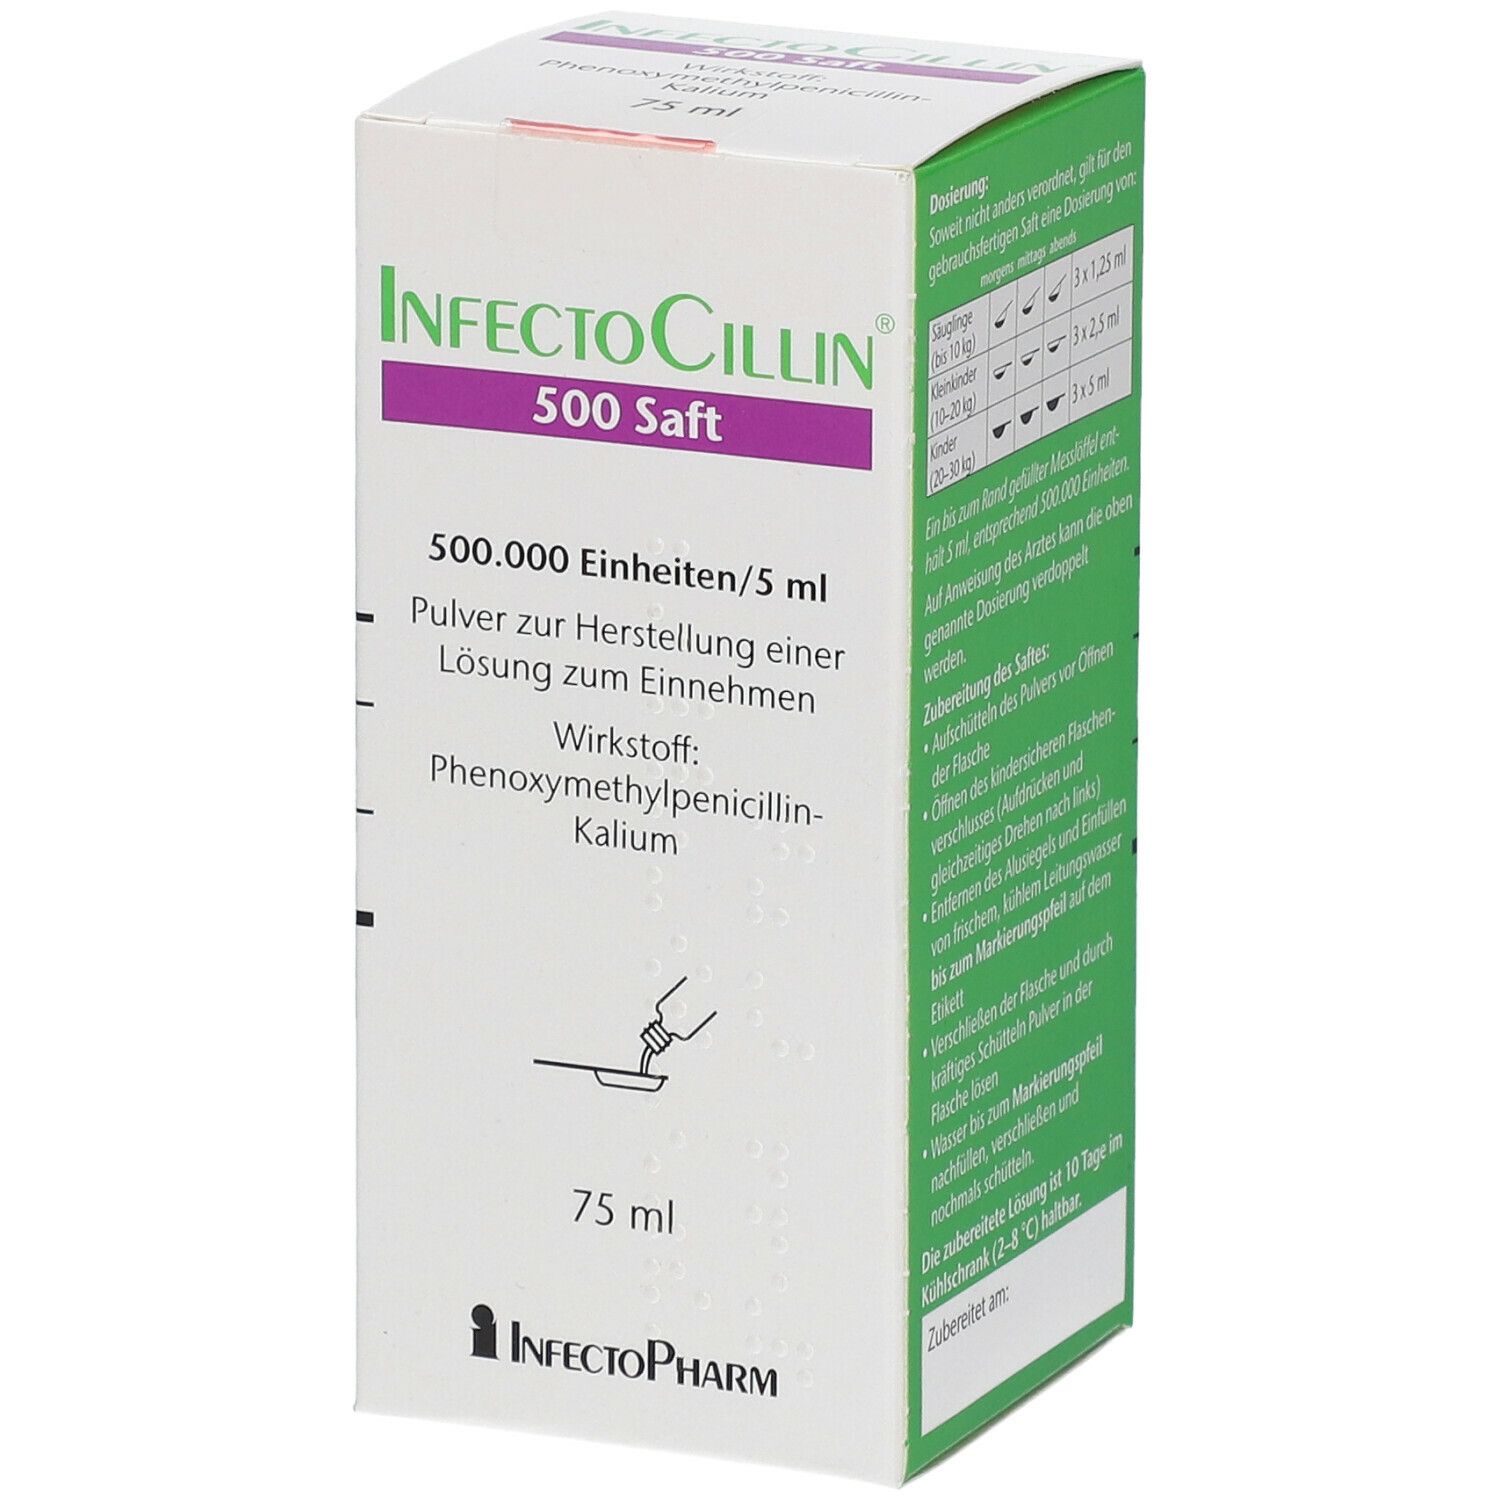 InfectoCillin® 500 Saft